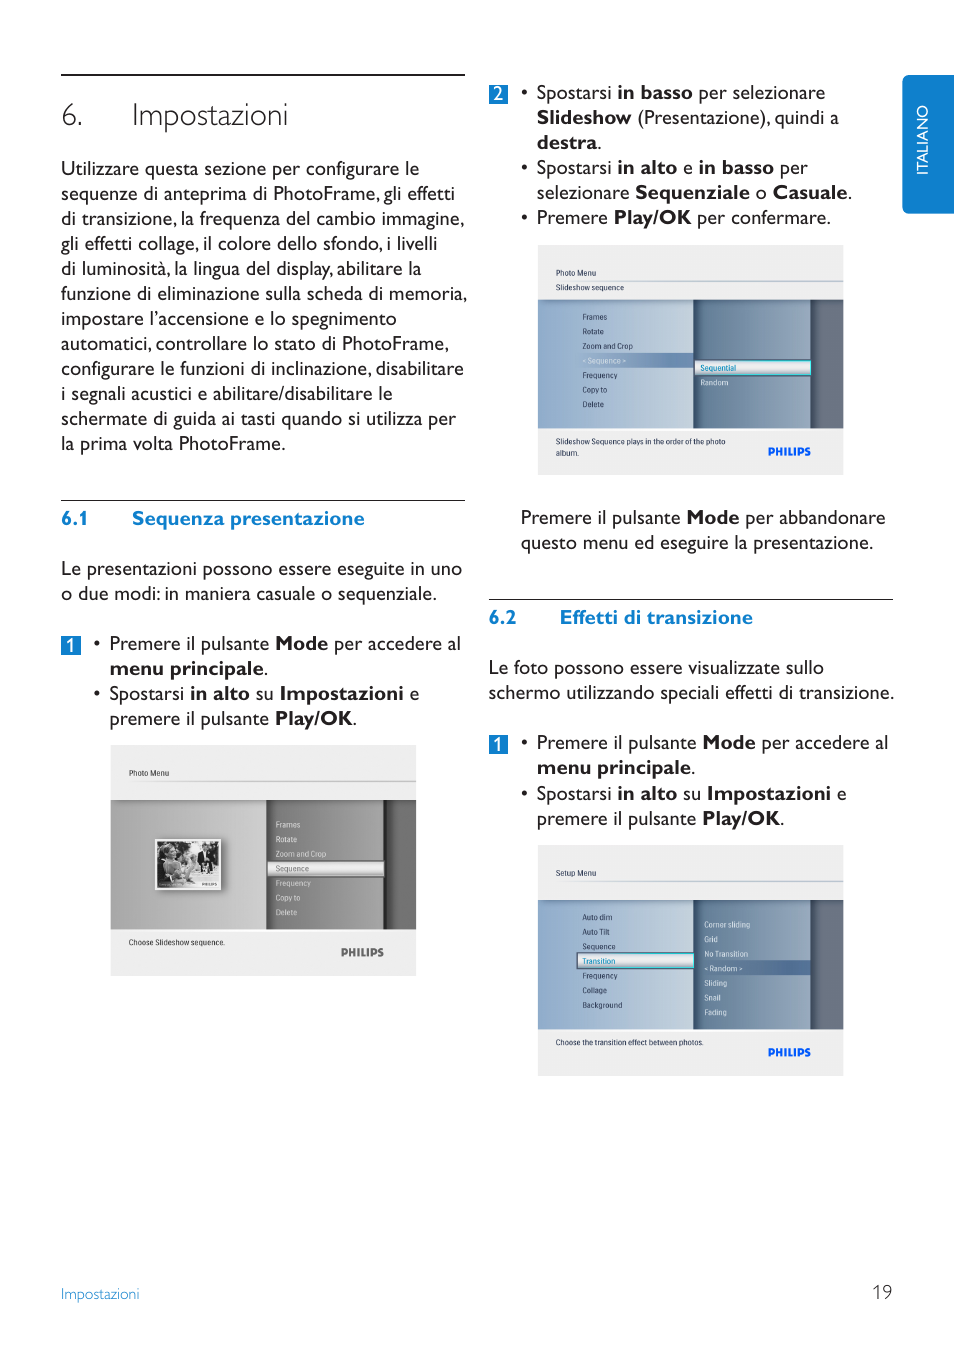 Impostazioni, Sequenza.presentazione, Effetti.di.transizione | Philips PHOTOFRAME 7FF3FP Manuale d'uso | Pagina 21 / 39